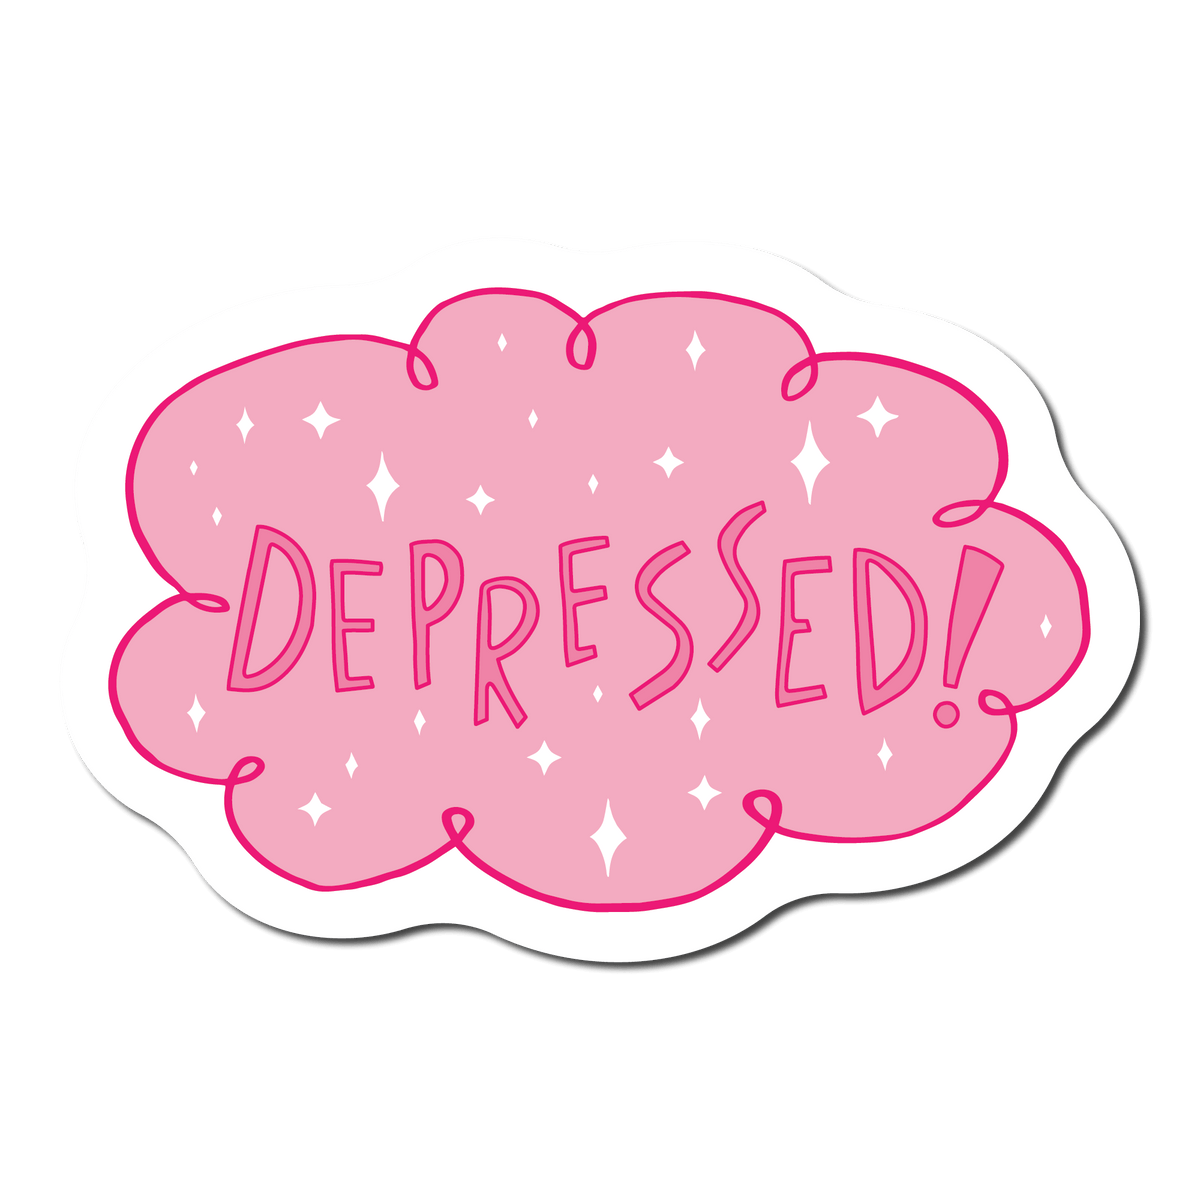 Mini Depressed! Sticker